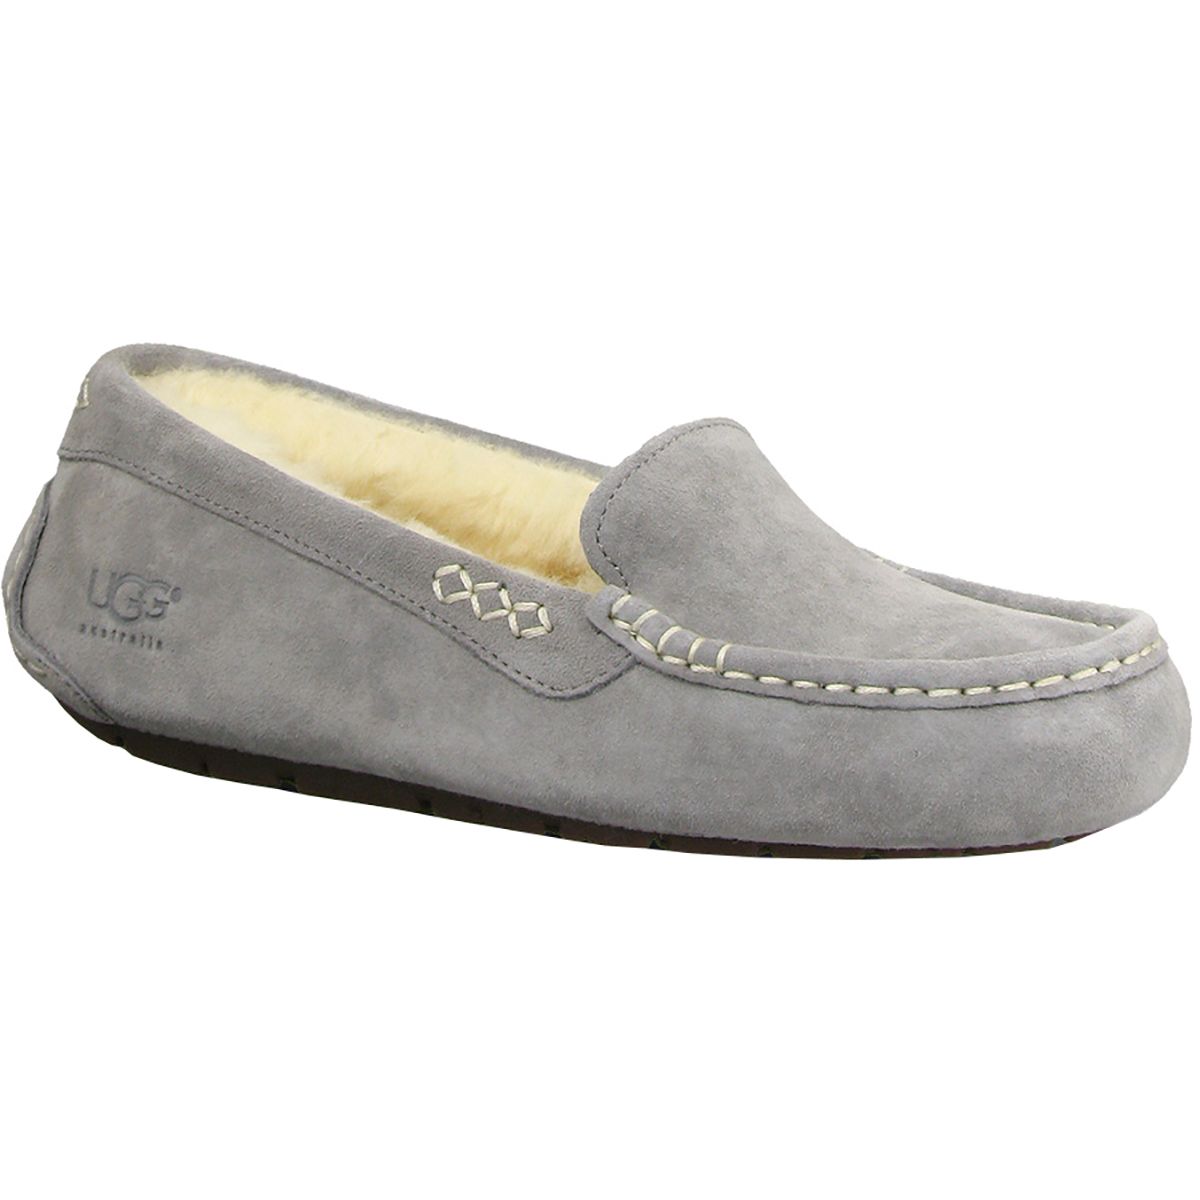 ugg ansley slippers light grey